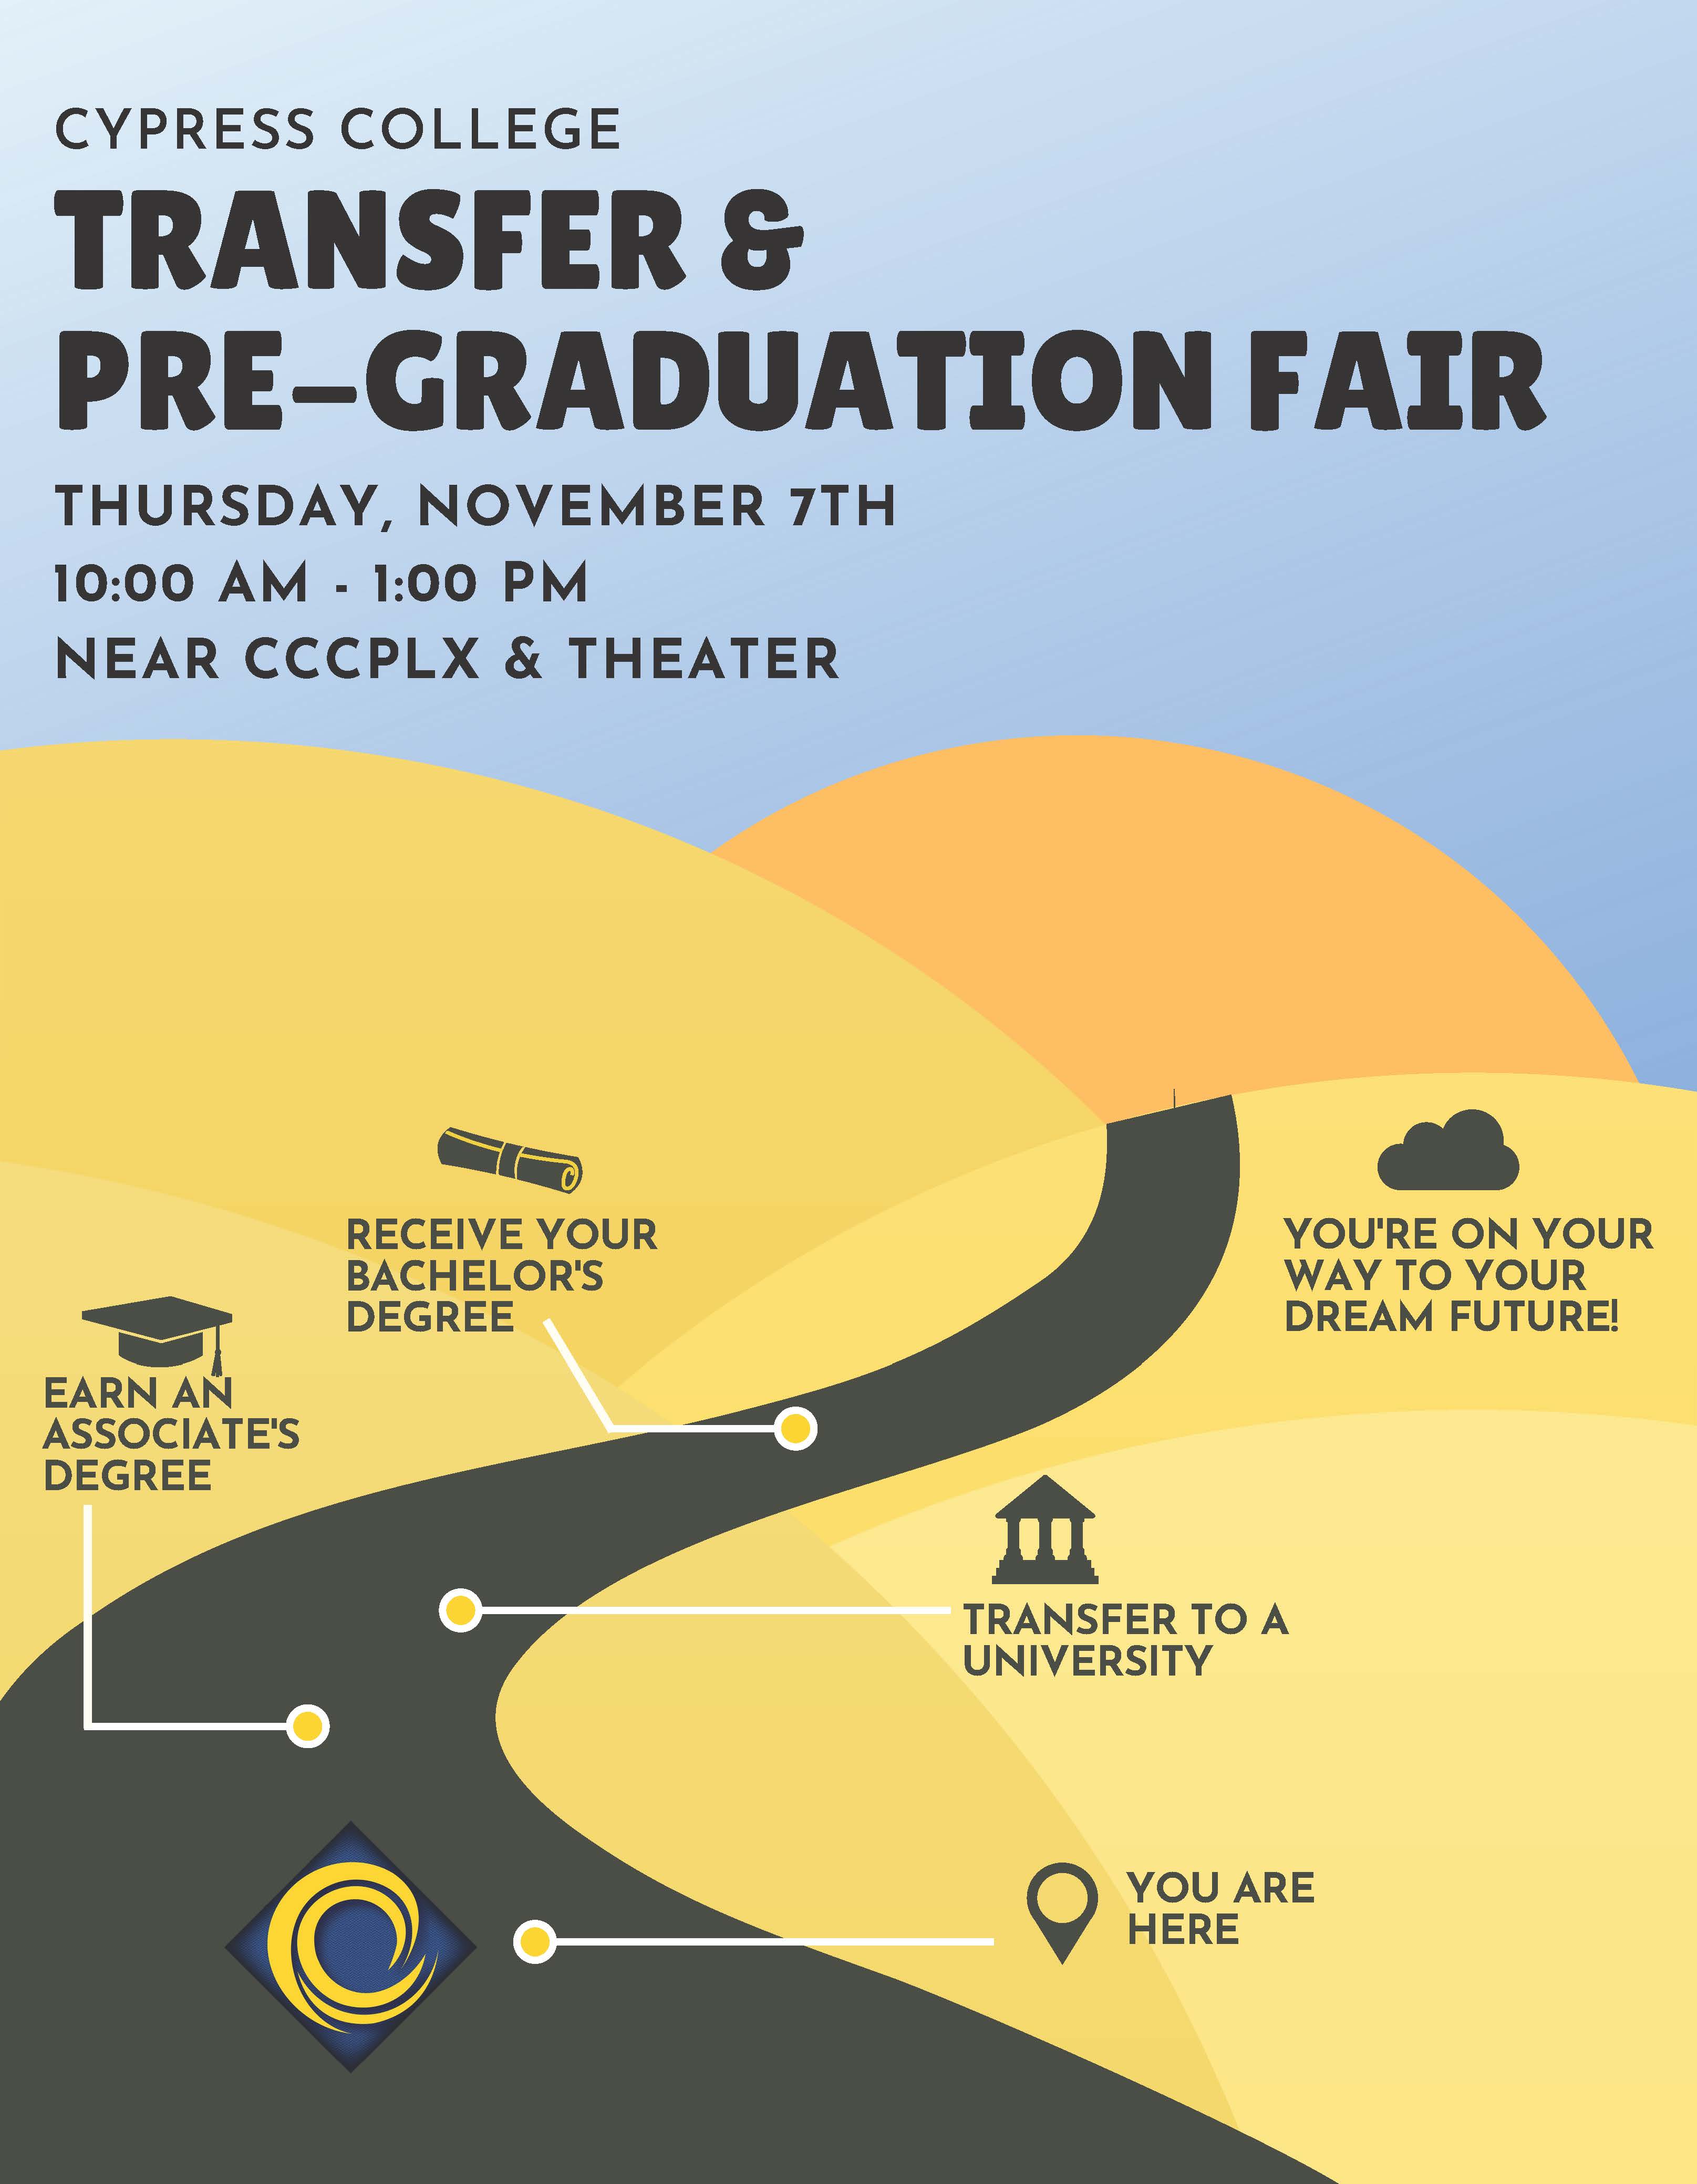 Transfer & Pre-Graduation Fair flyer